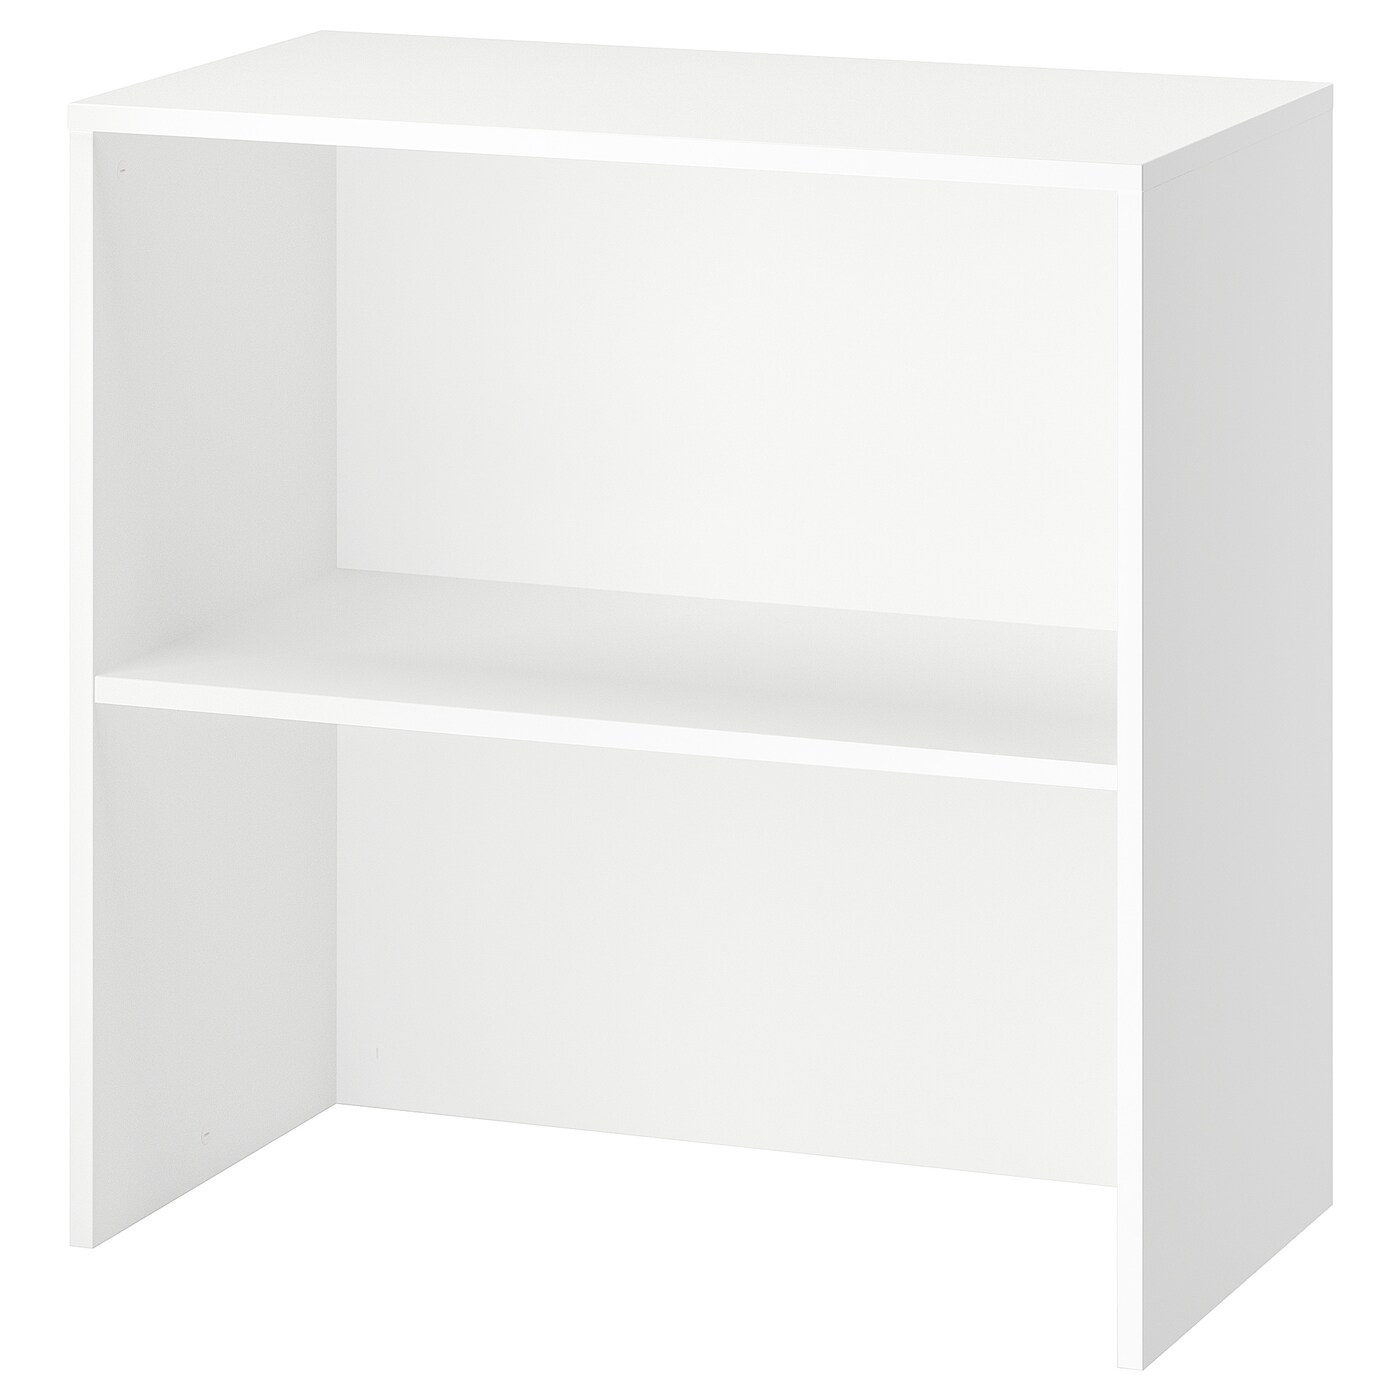 GALANT add-on unit white - IKEA